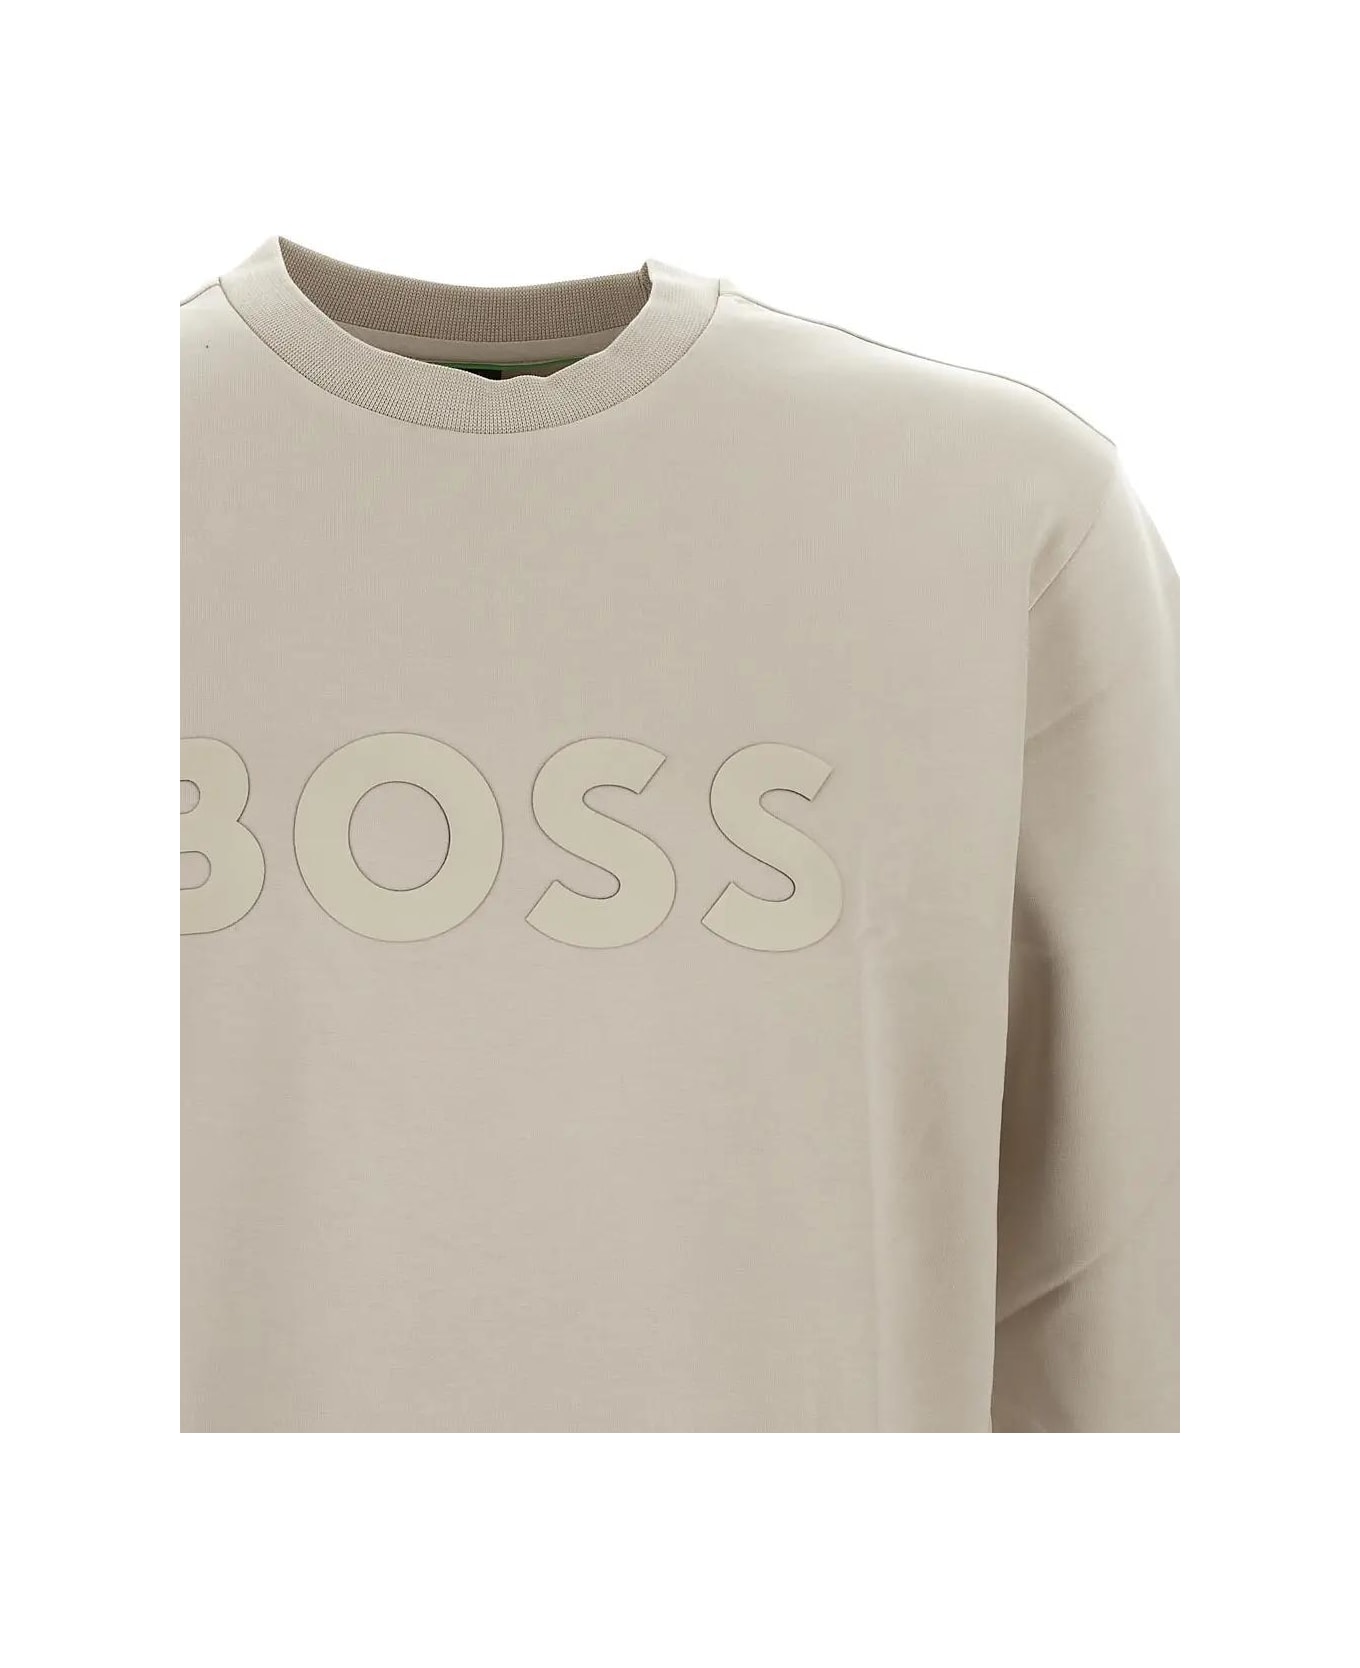 Hugo Boss Logo Sweatshirt - Beige